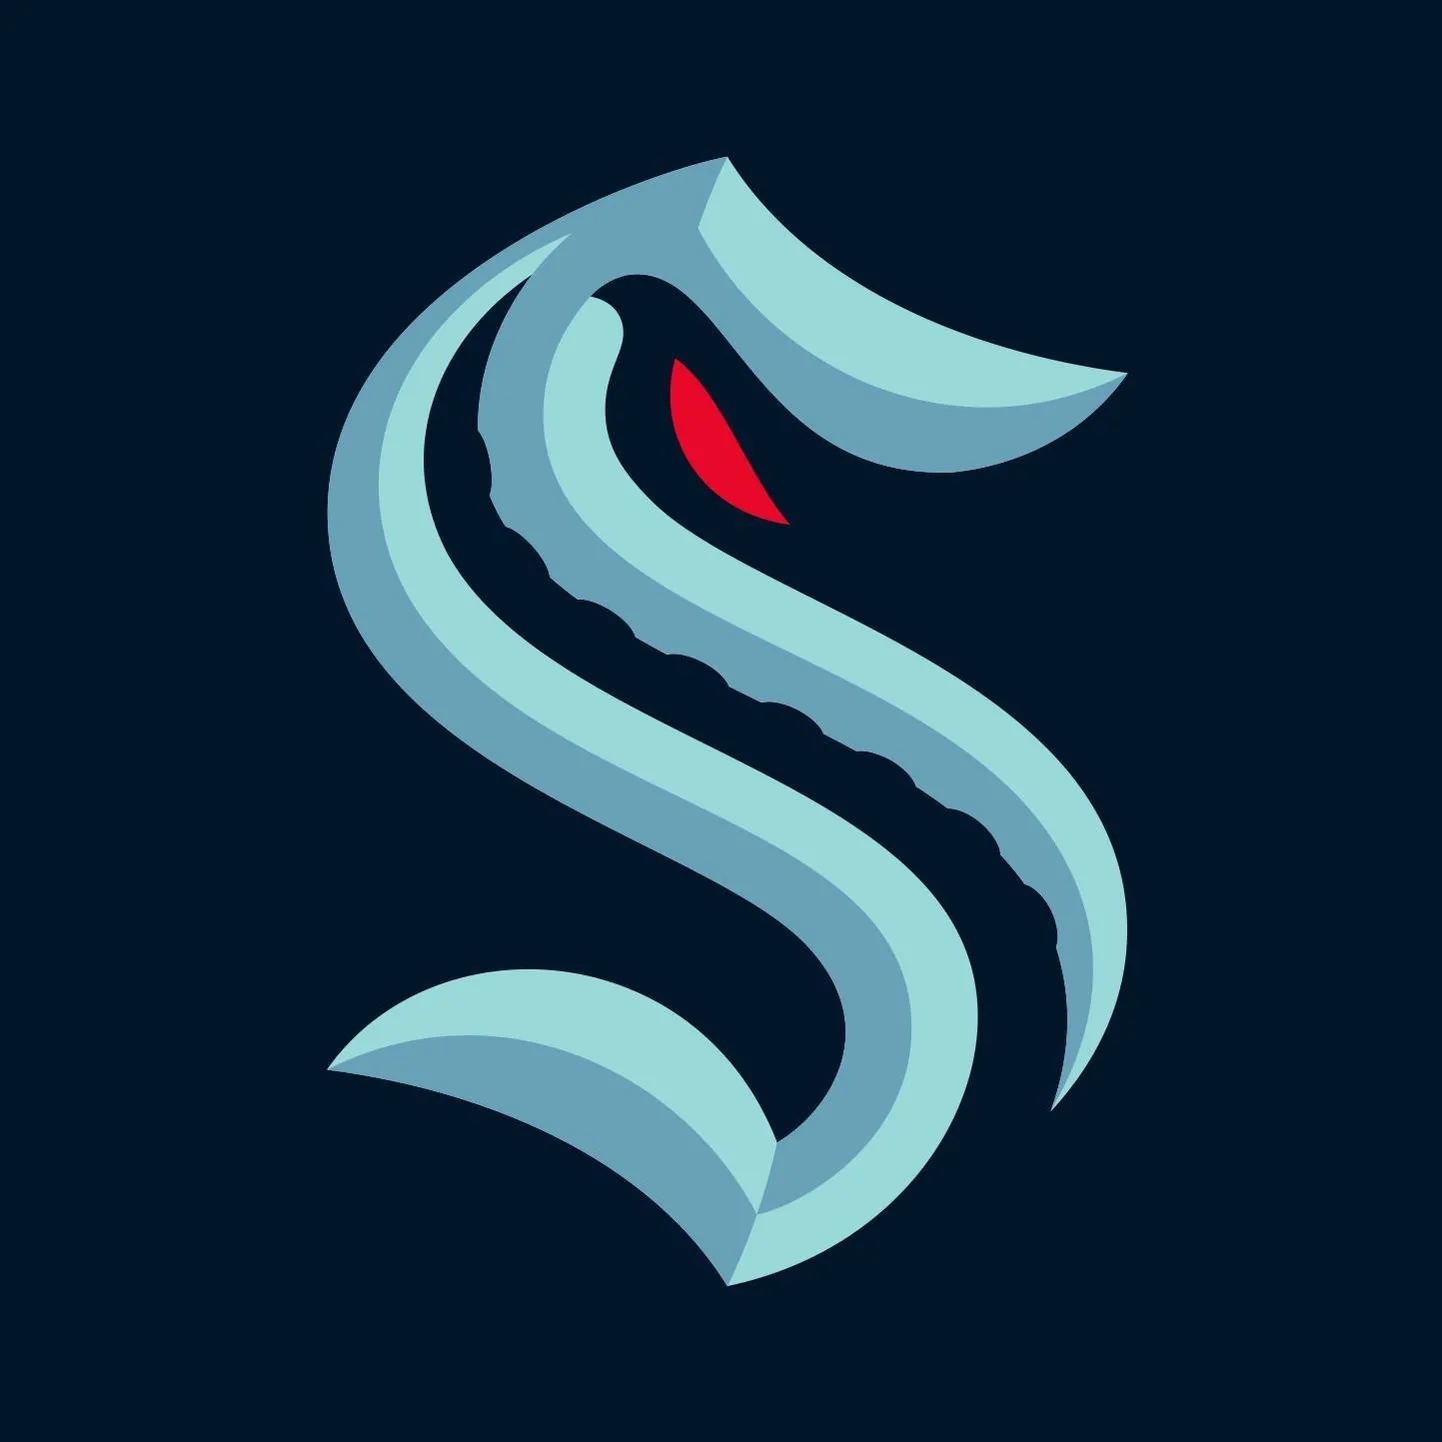 Sietlas "Kraken" logo.